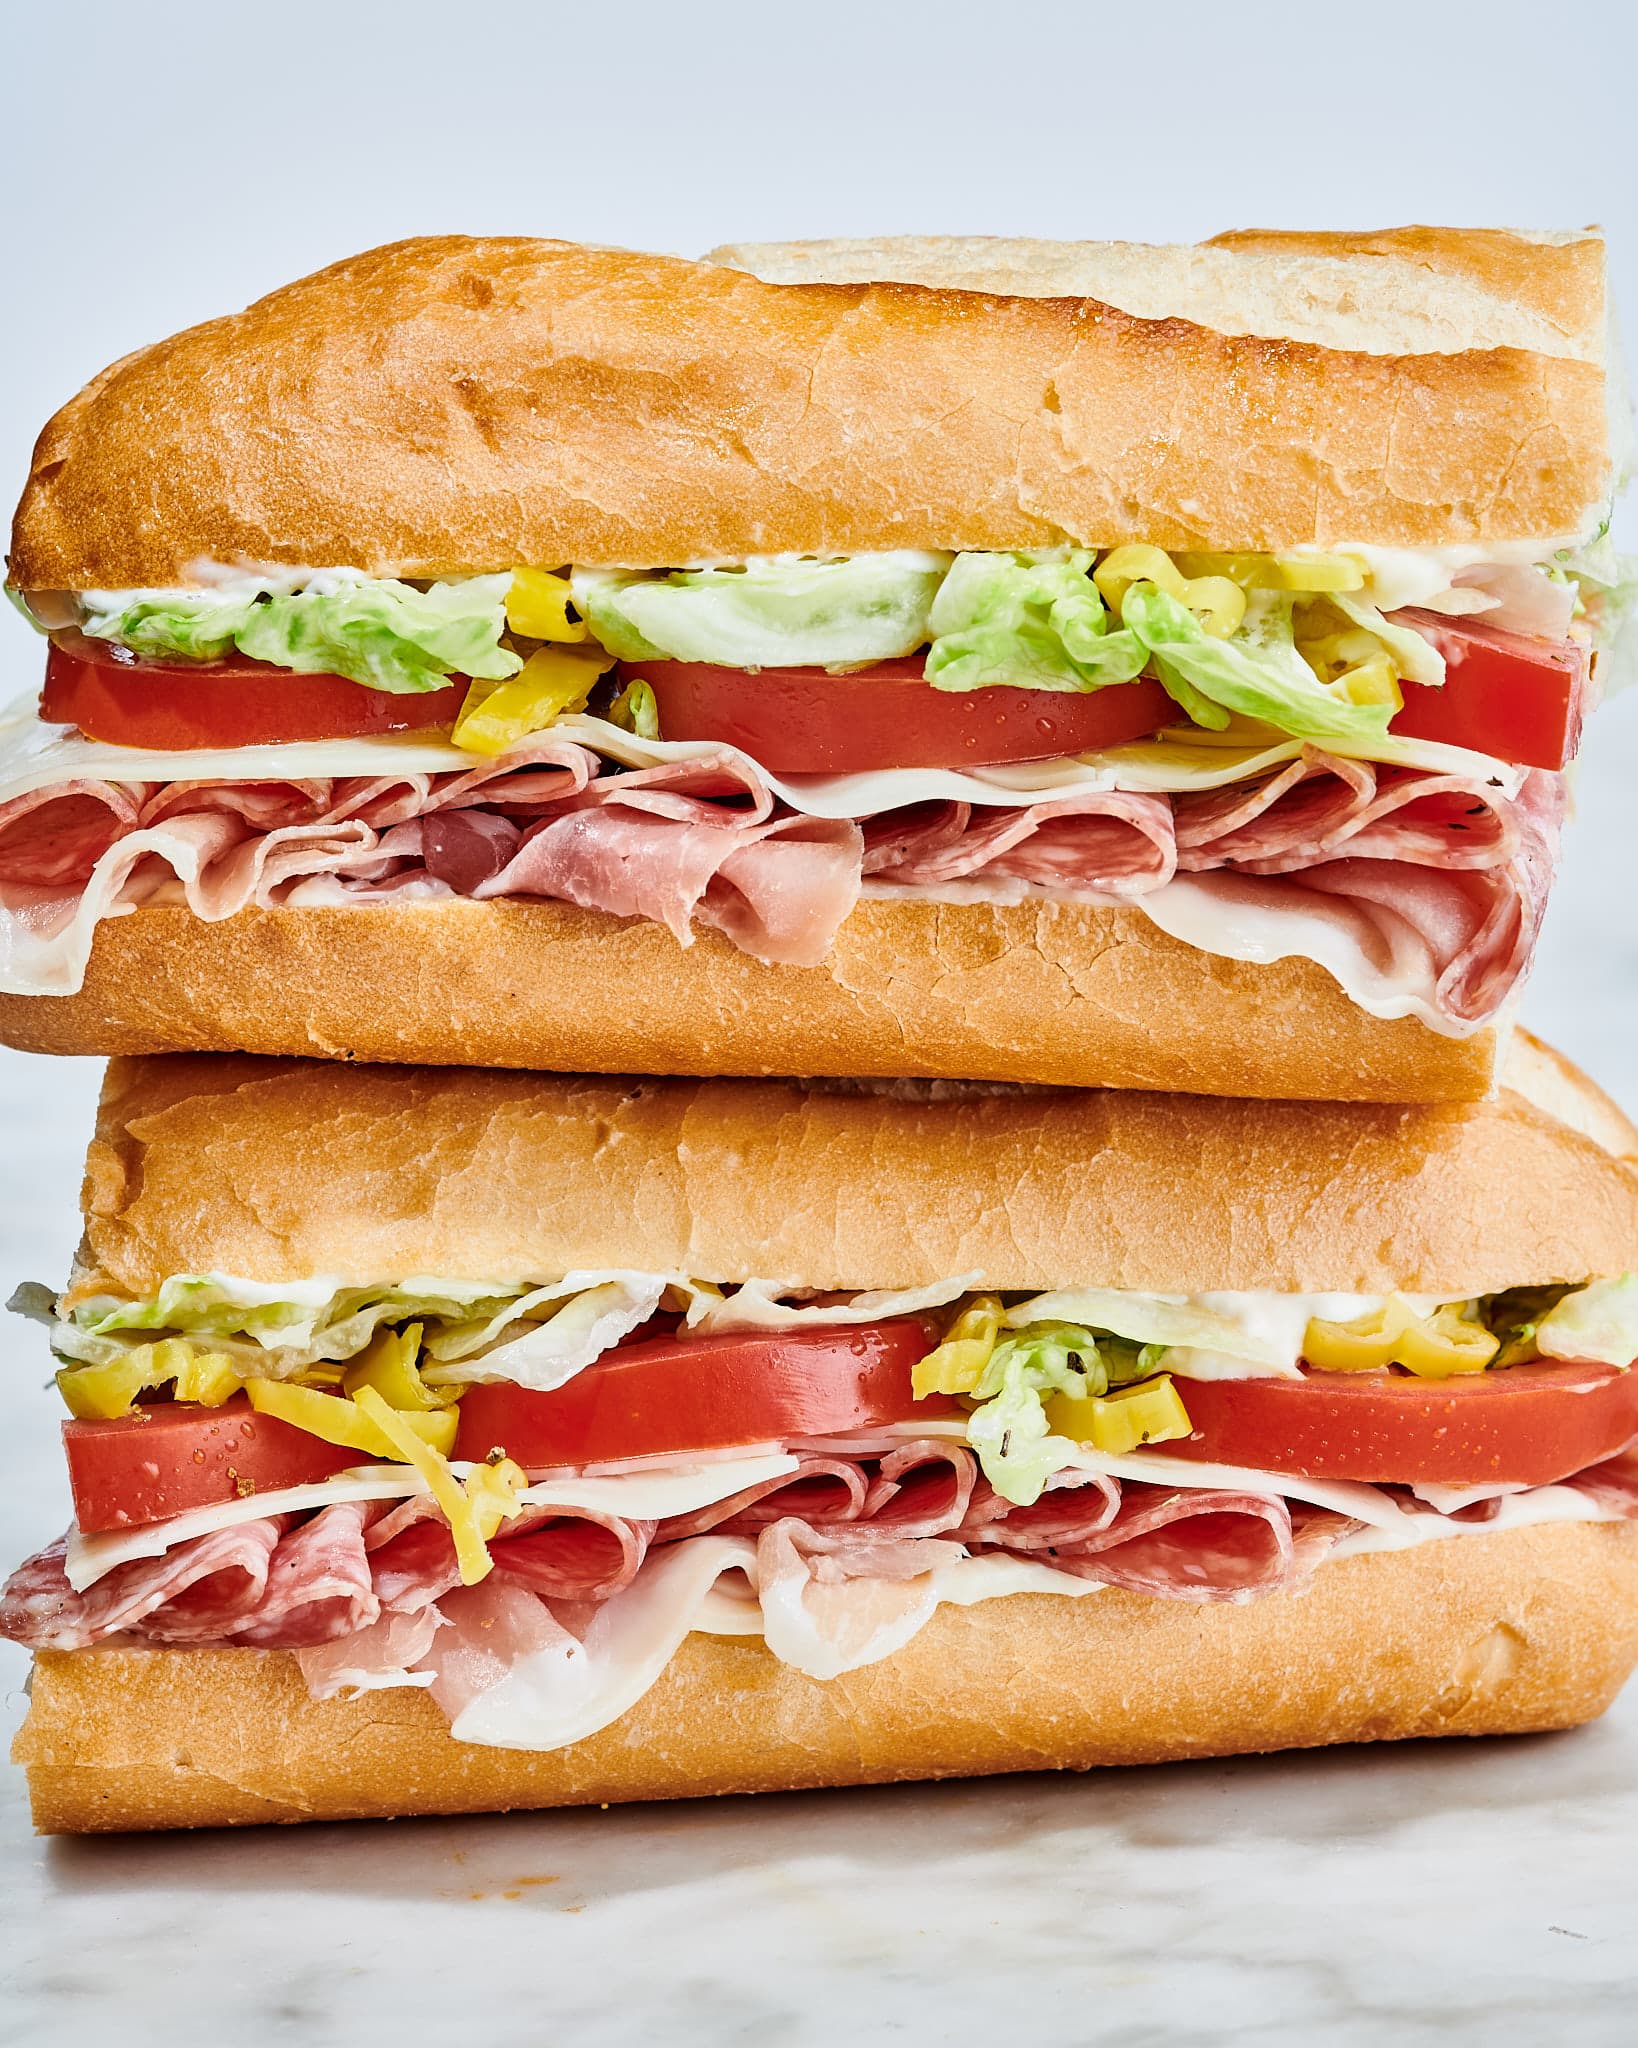 Subway has new Italian sandwiches made with fresh mozzarella